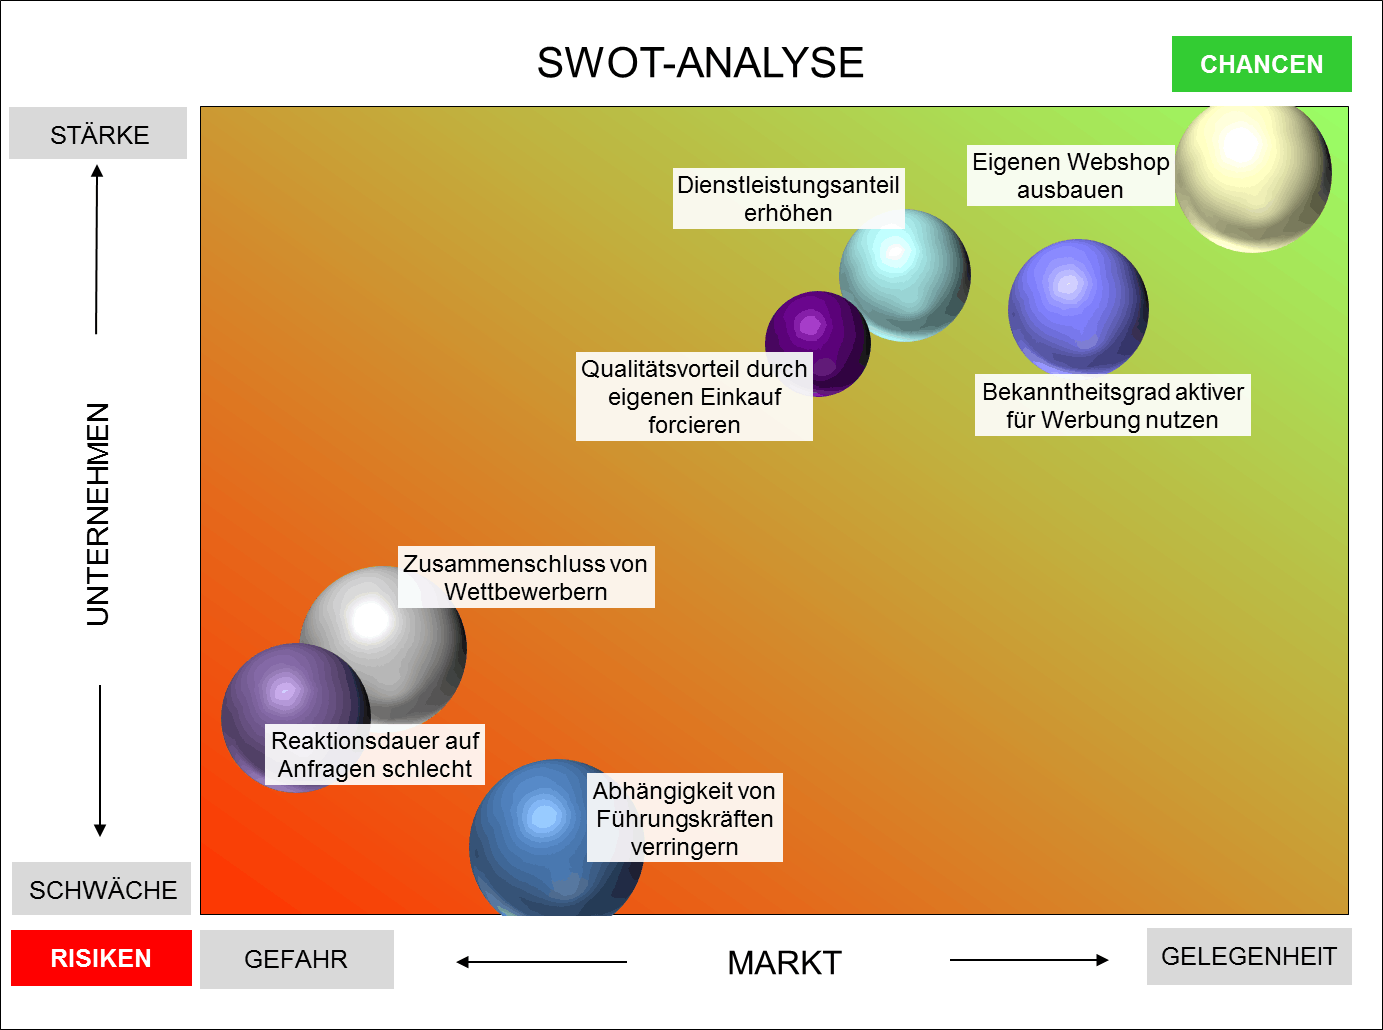 SWOT-ANALYSE